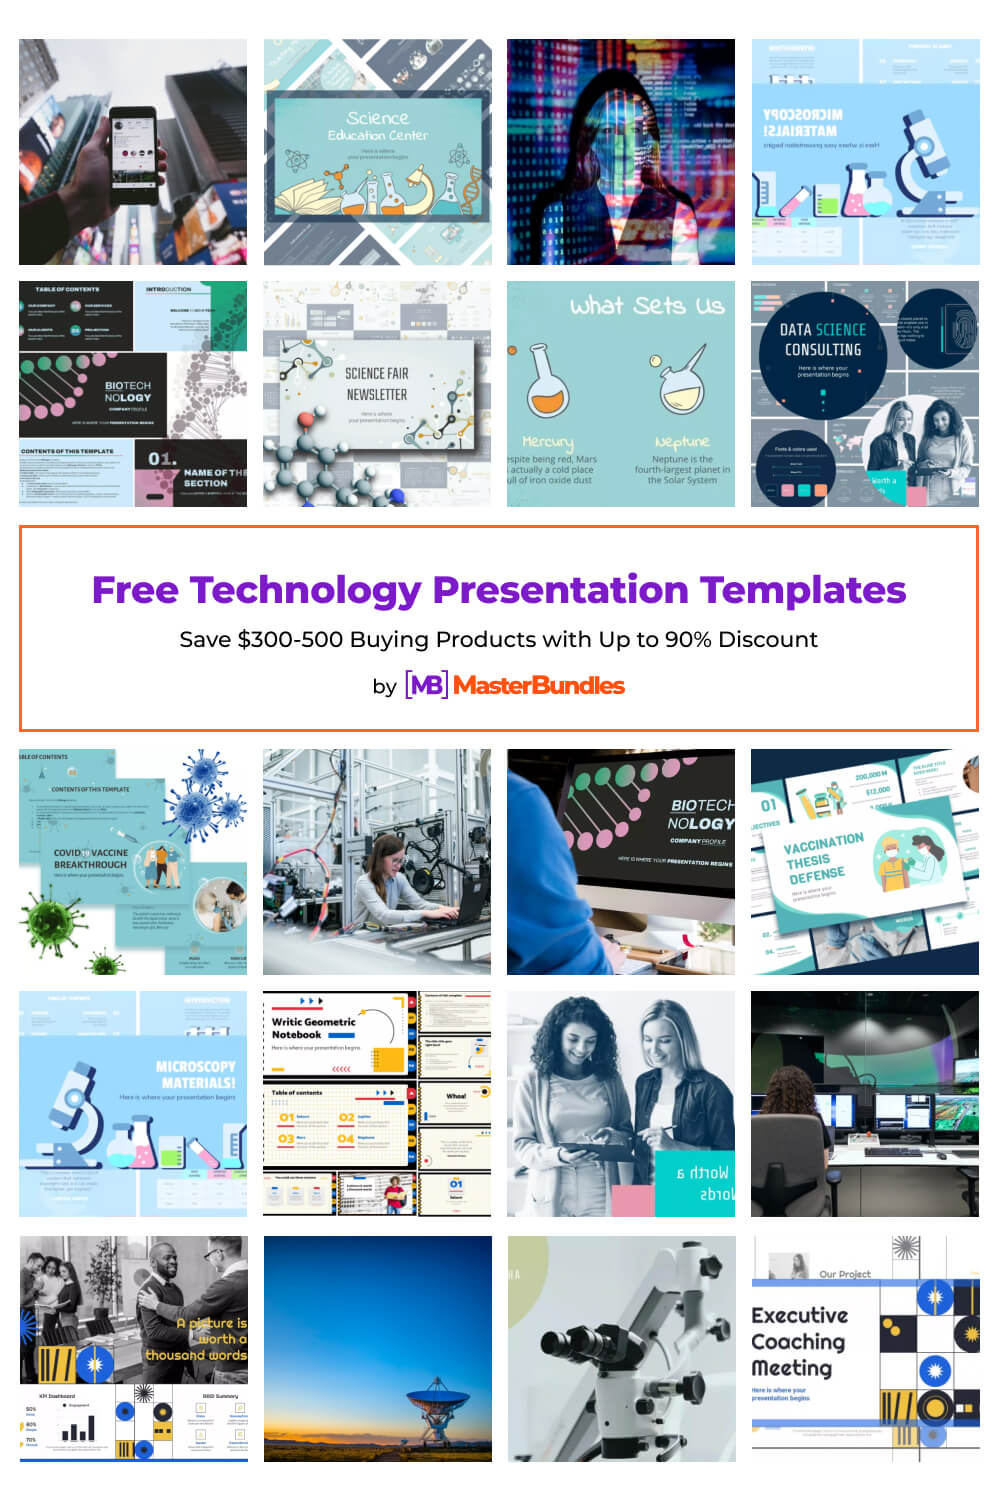 free technology presentation templates pinterest image.